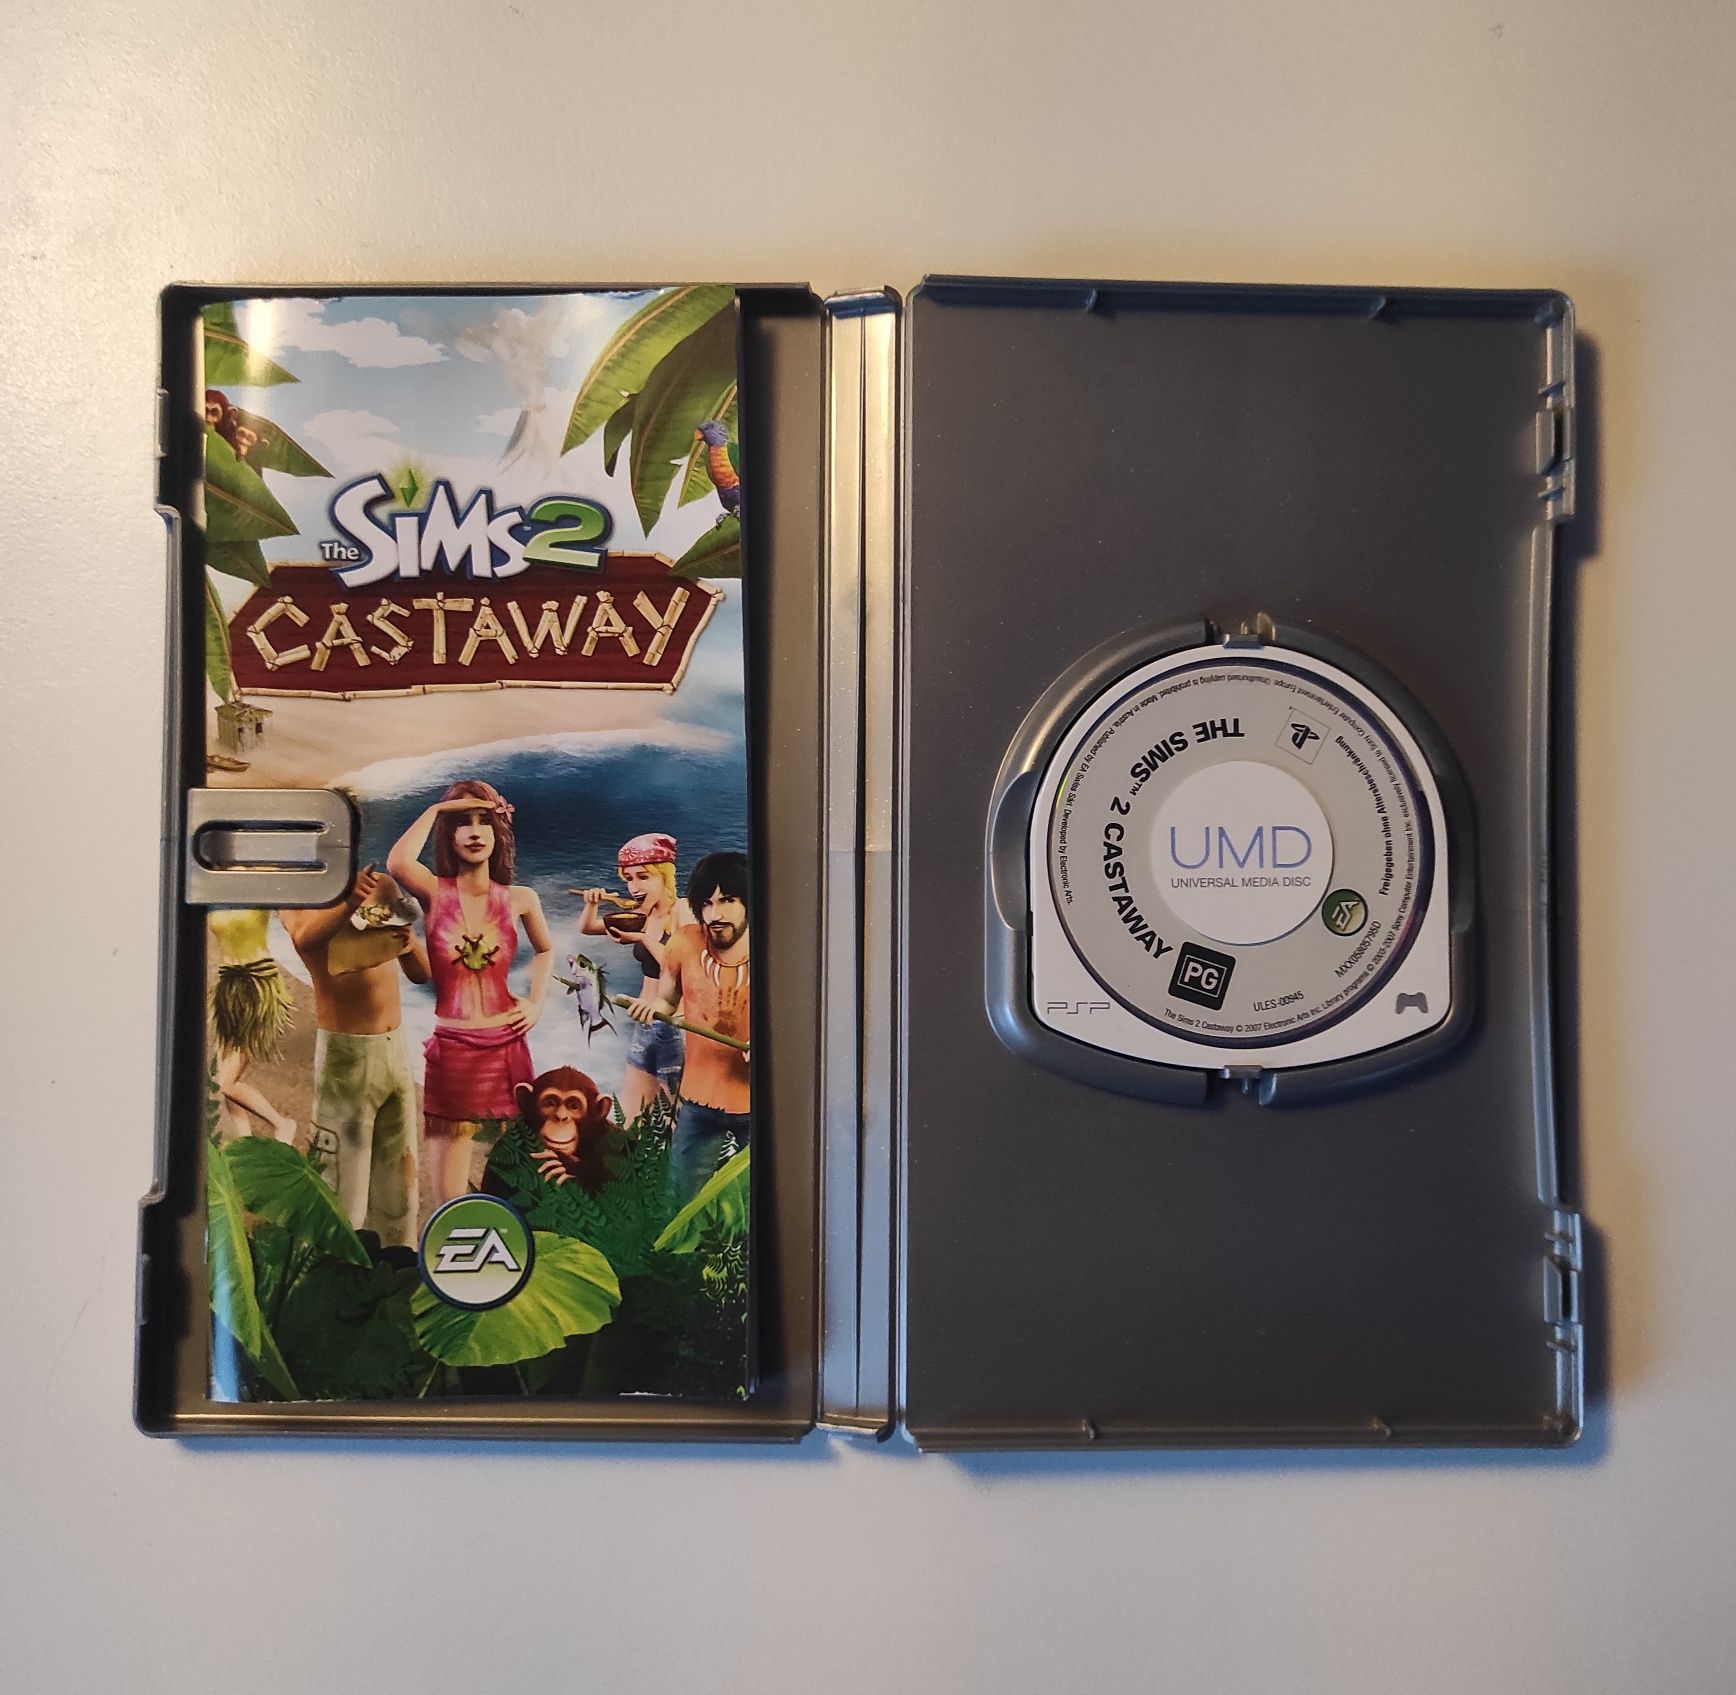 Sims 2 Castaway PSP